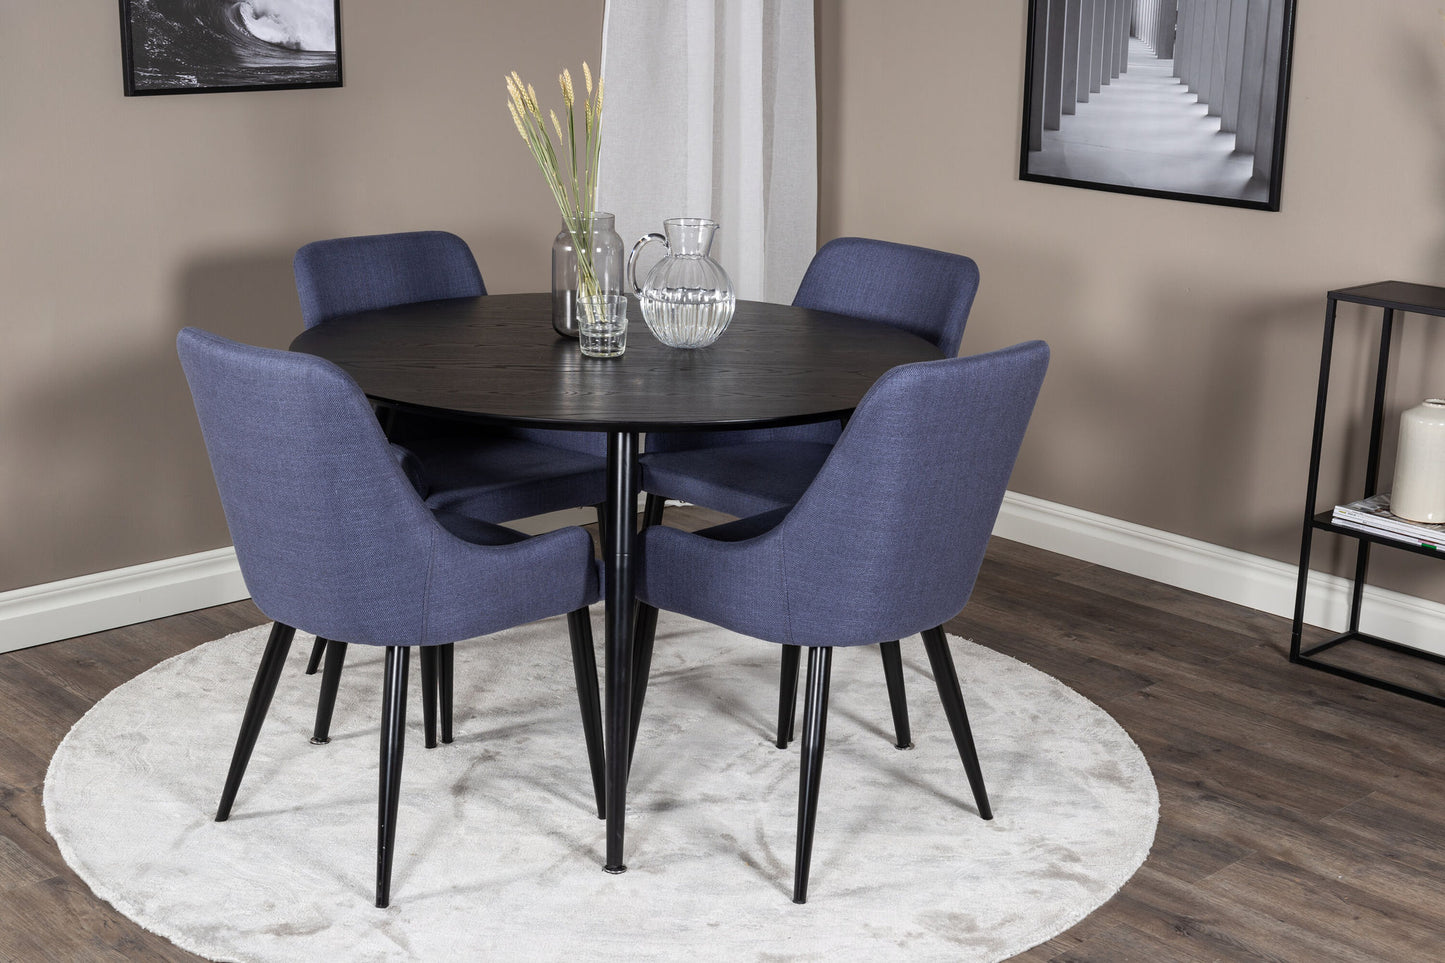 Dipp - Spisebord, 115cm - Sort finér / All sort ben + Plaza Spisebordsstol - Sorte ben - Blåt stof